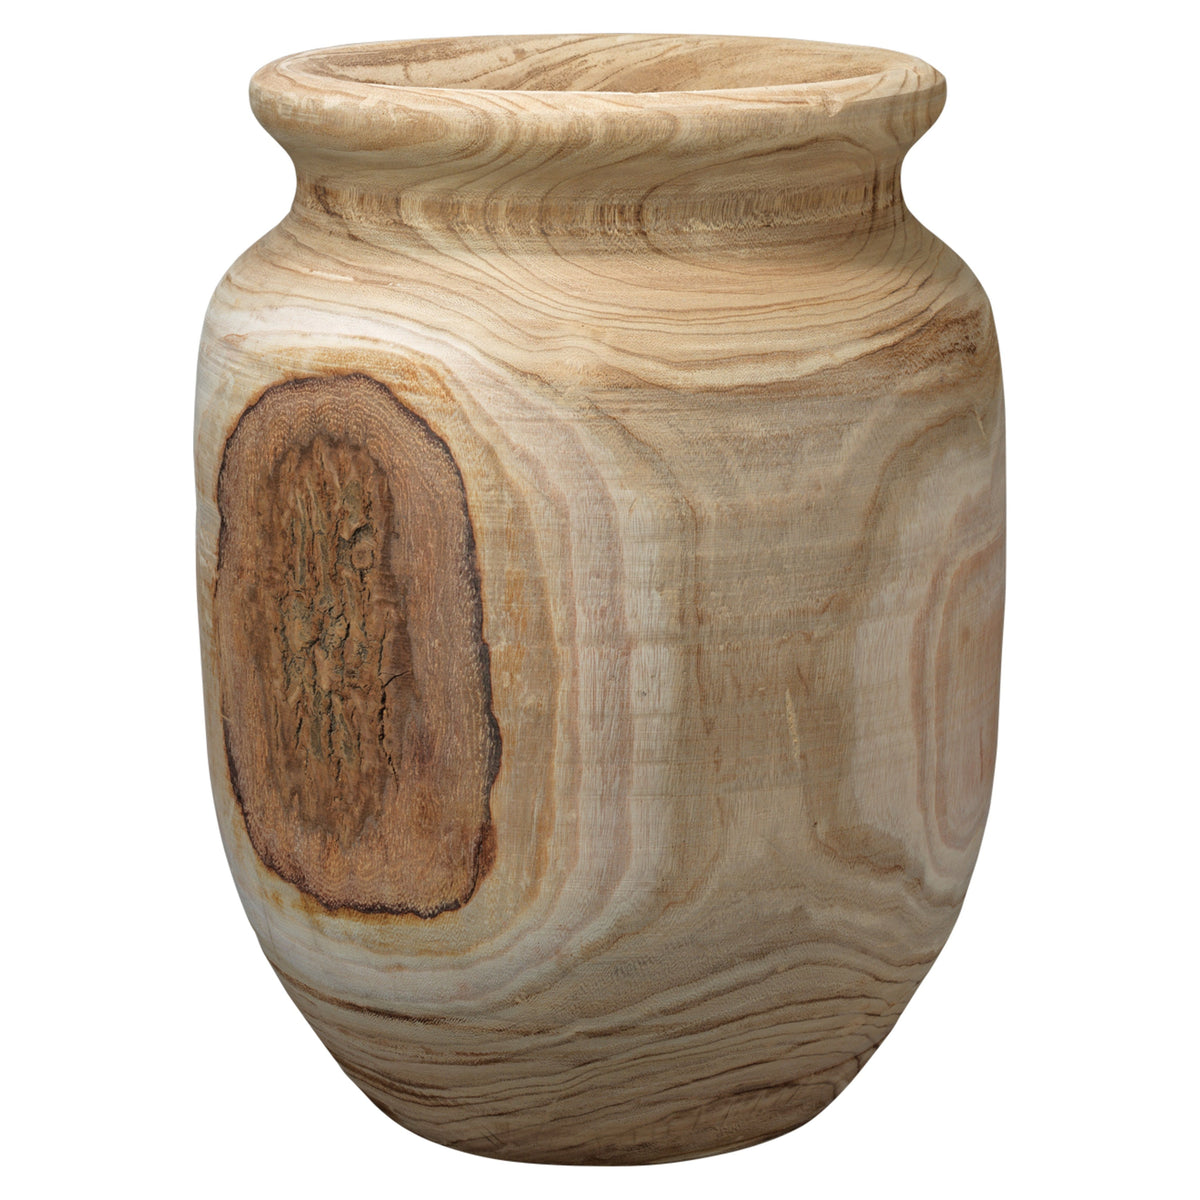 Jamie Young Company - 7TOPA-VAWD - Topanga Wooden Vase - Topanga - Natural